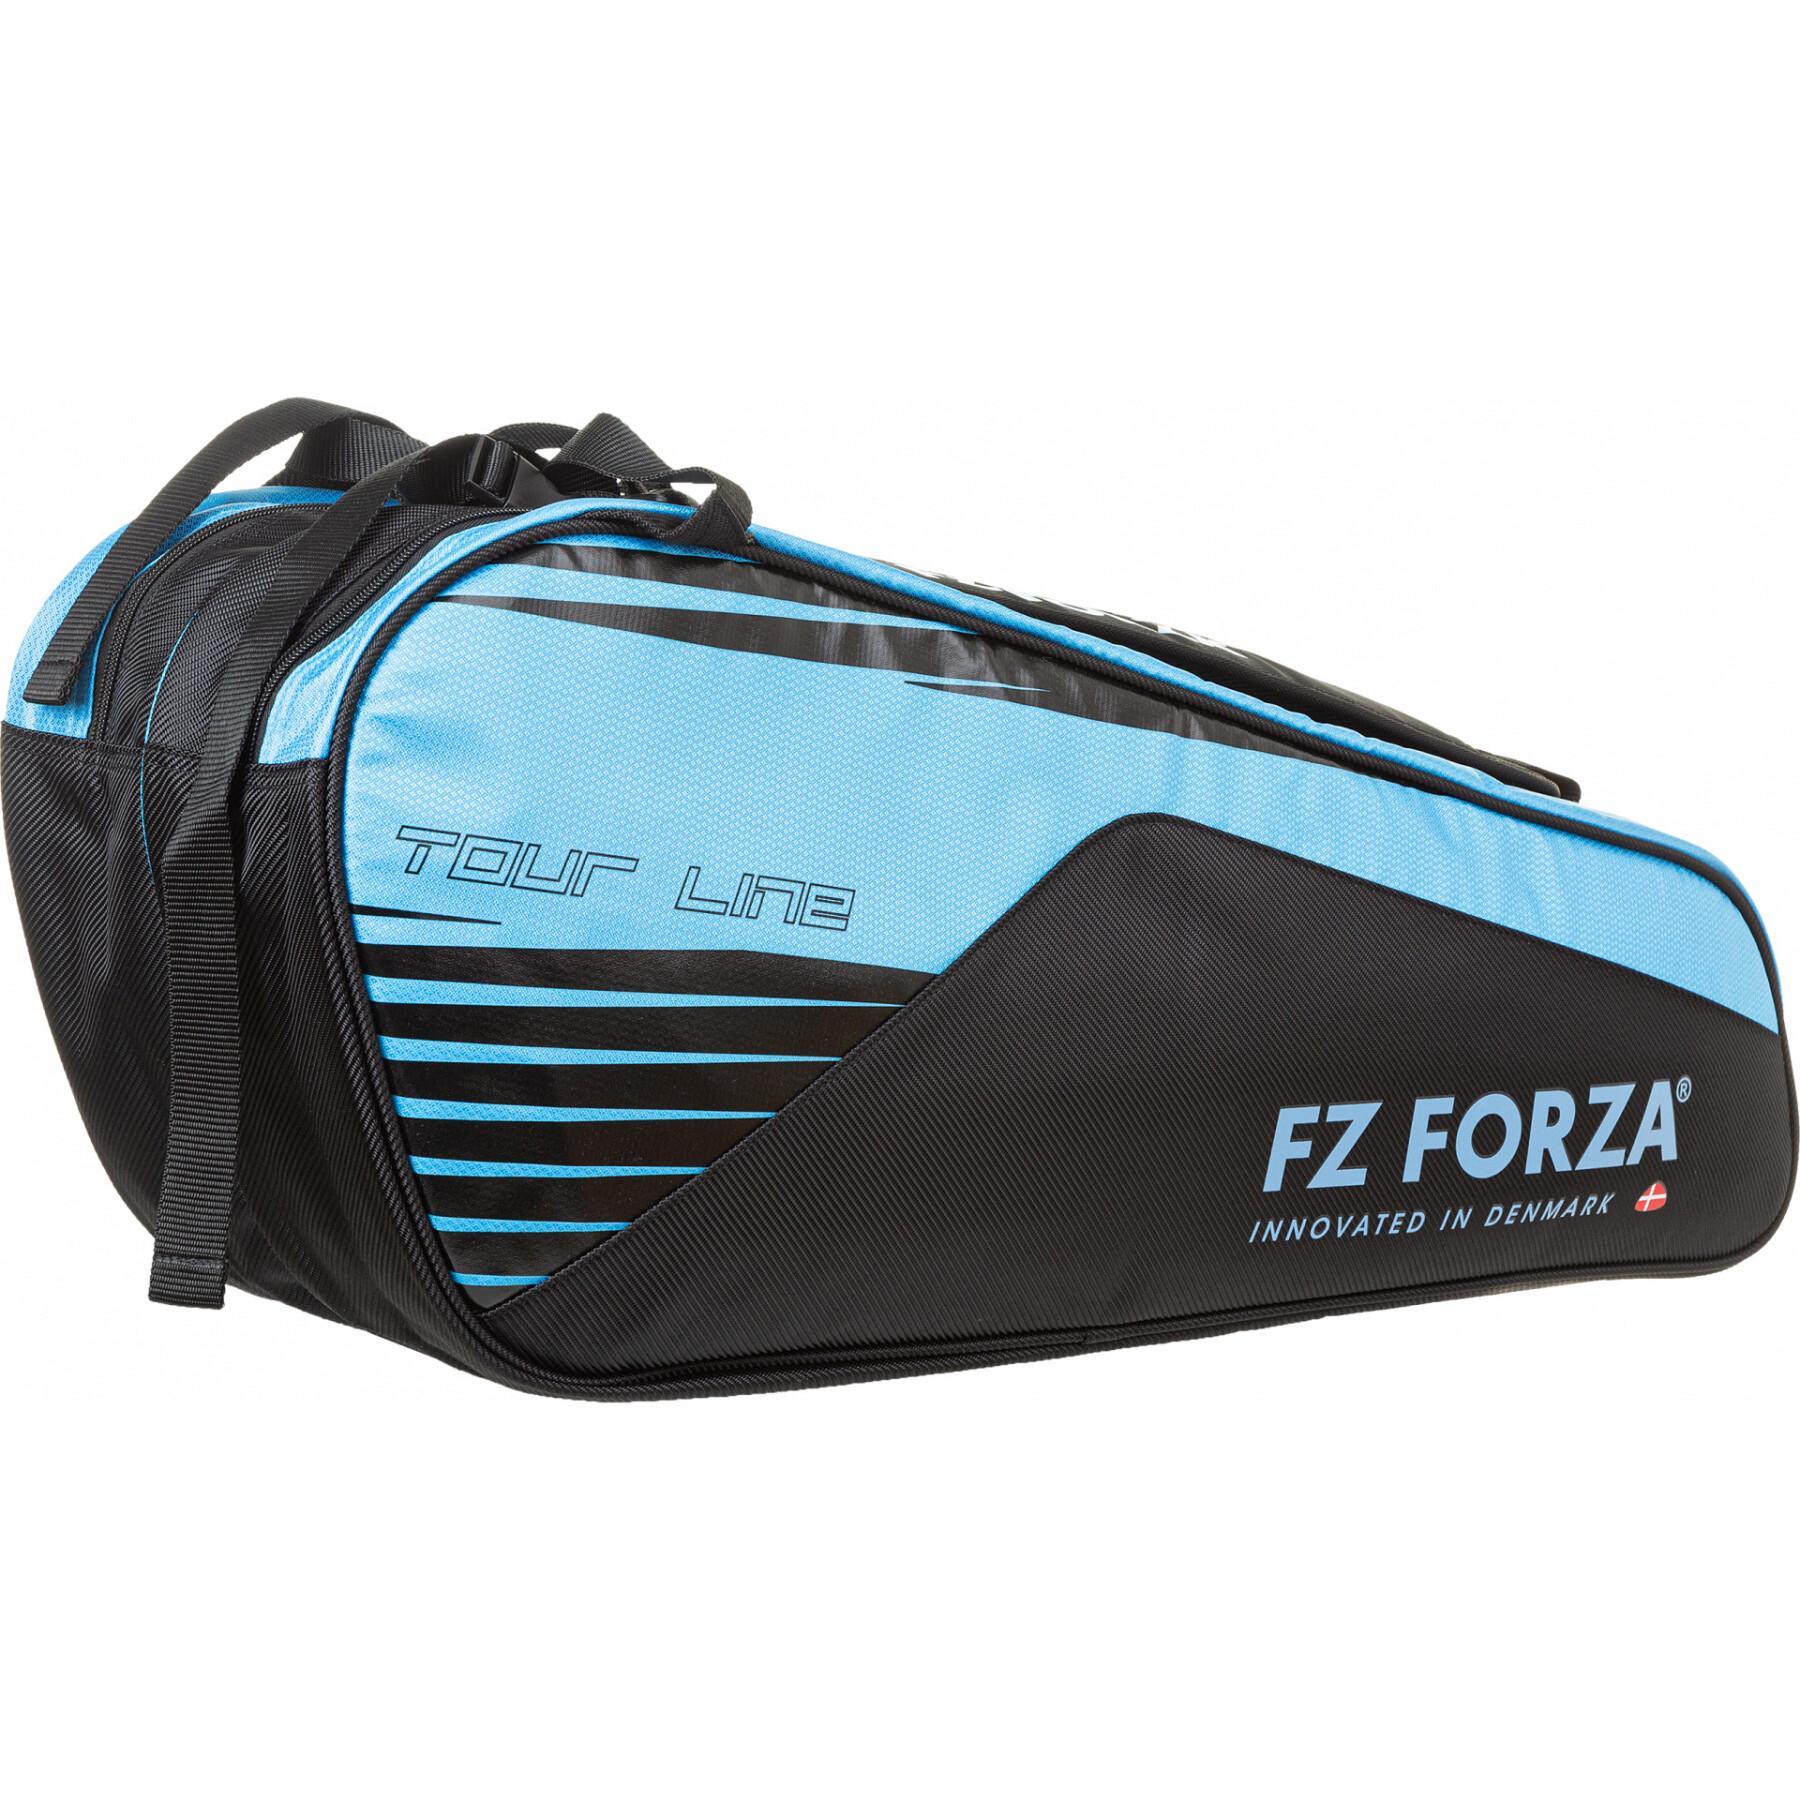 Bag for 6 badminton rackets FZ Forza